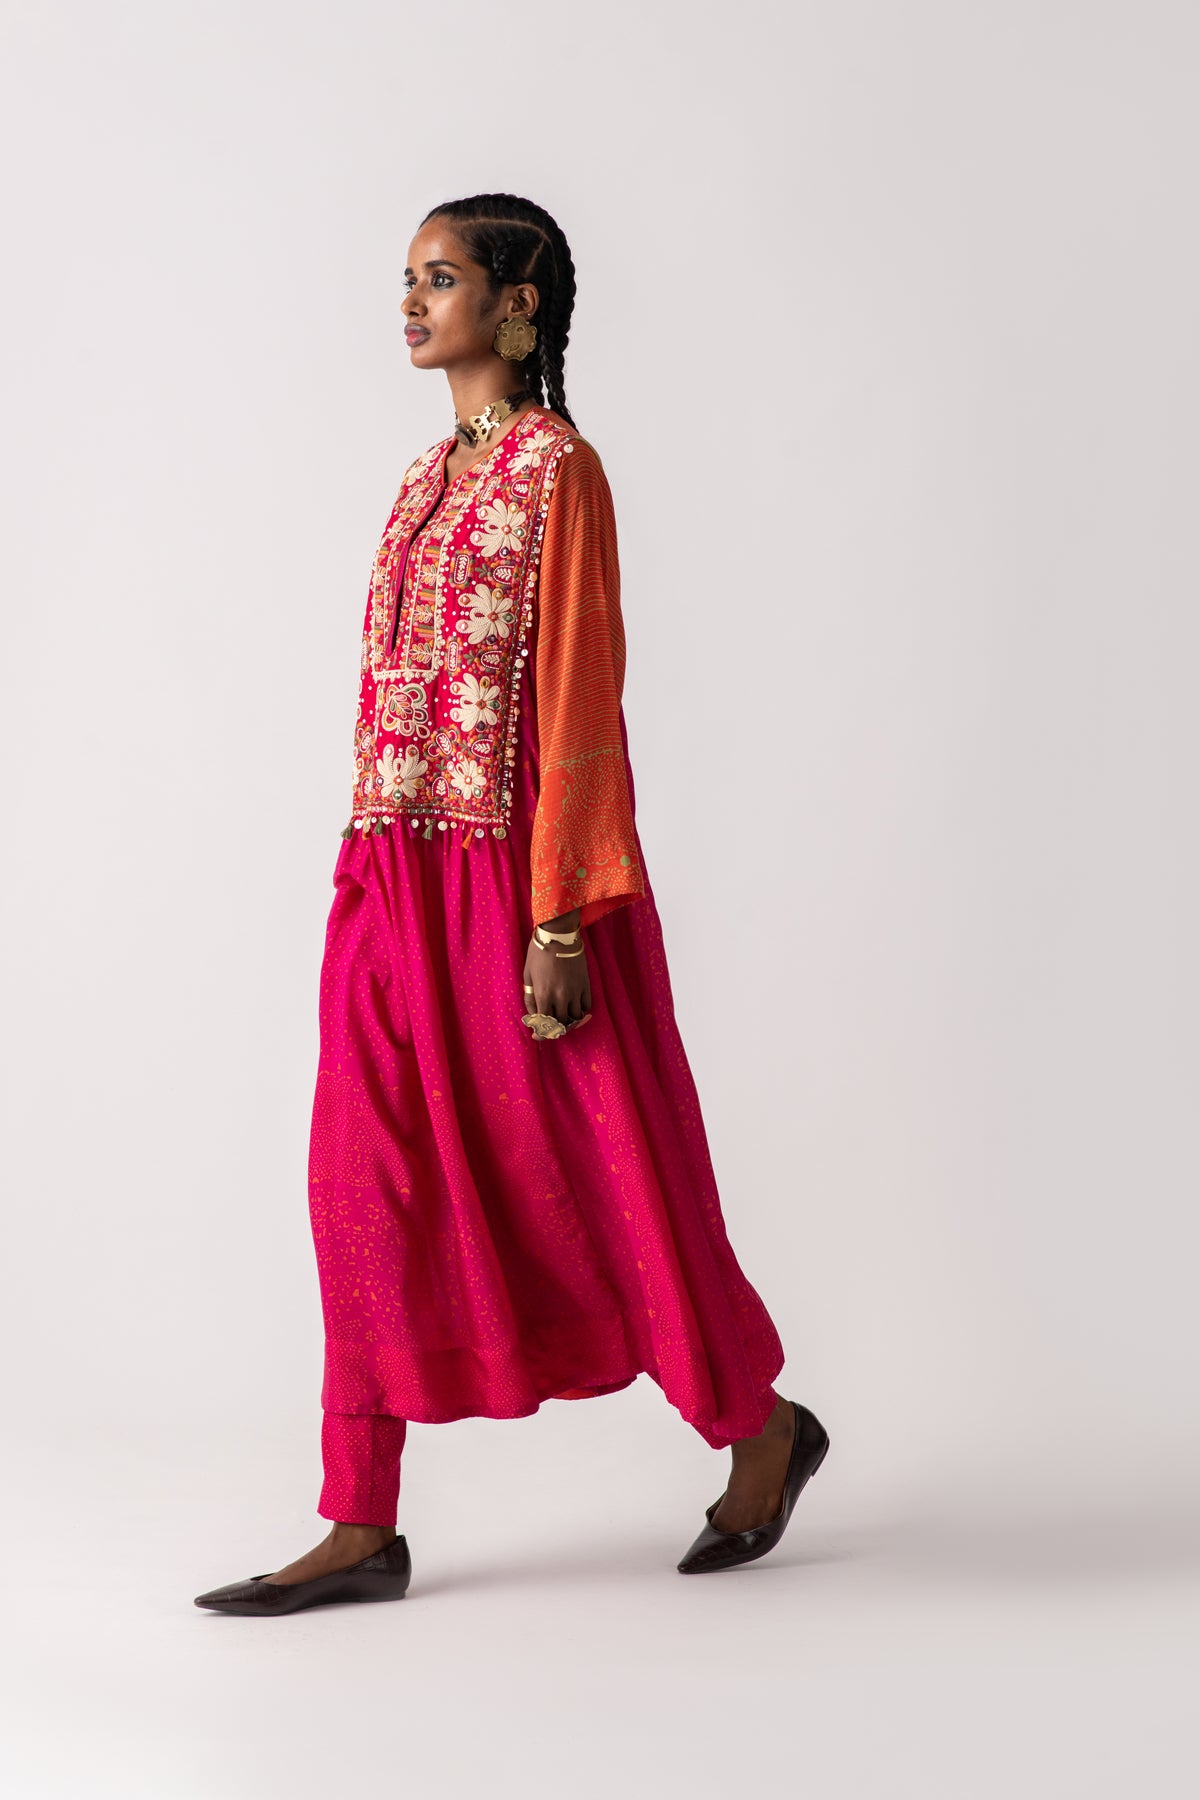 Sindhu afgan tunic with vipasa slim trouser